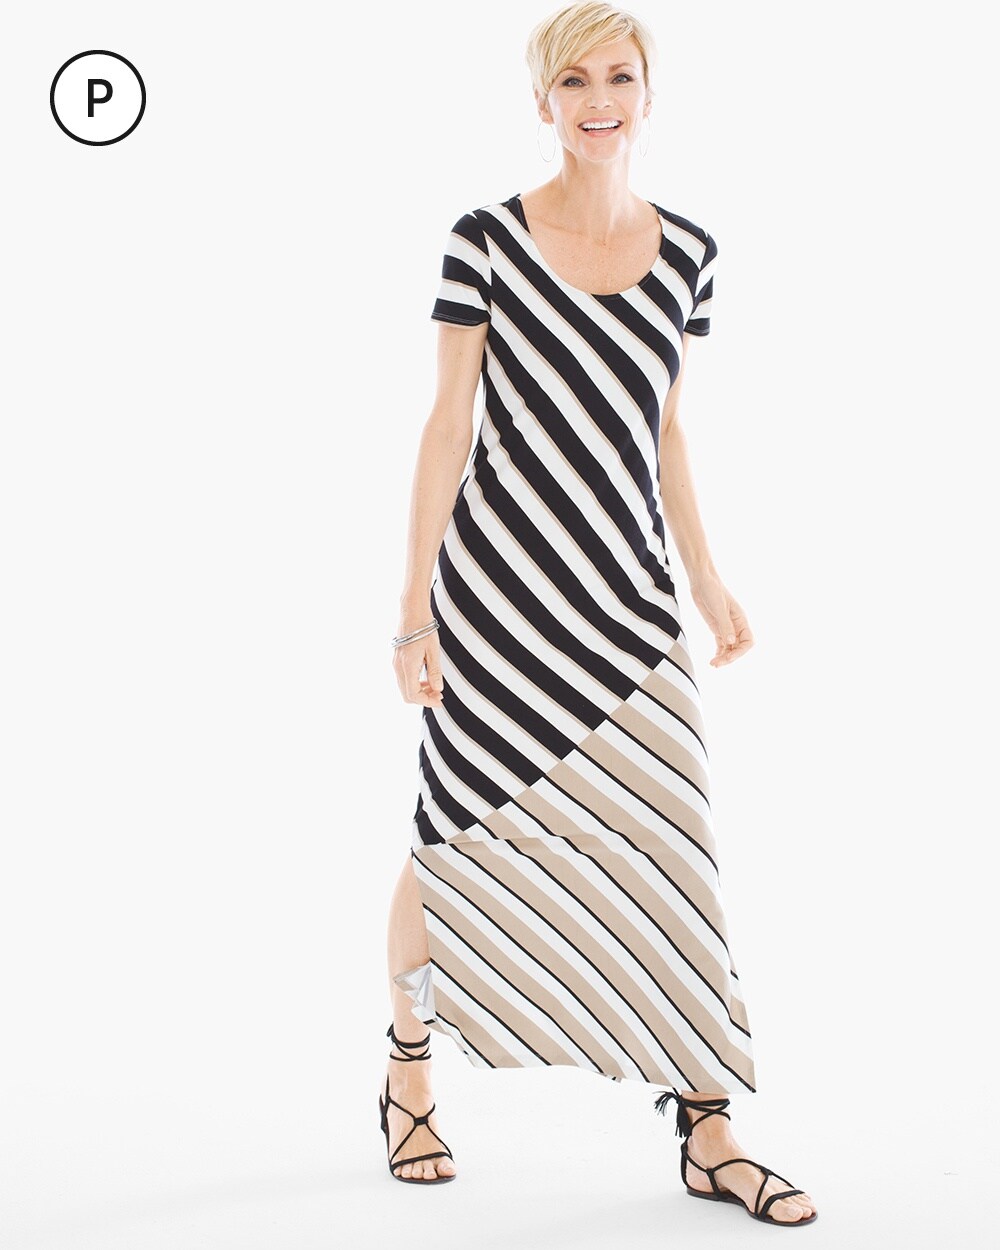 Zenergy Petite Diagonal Stripe Dress